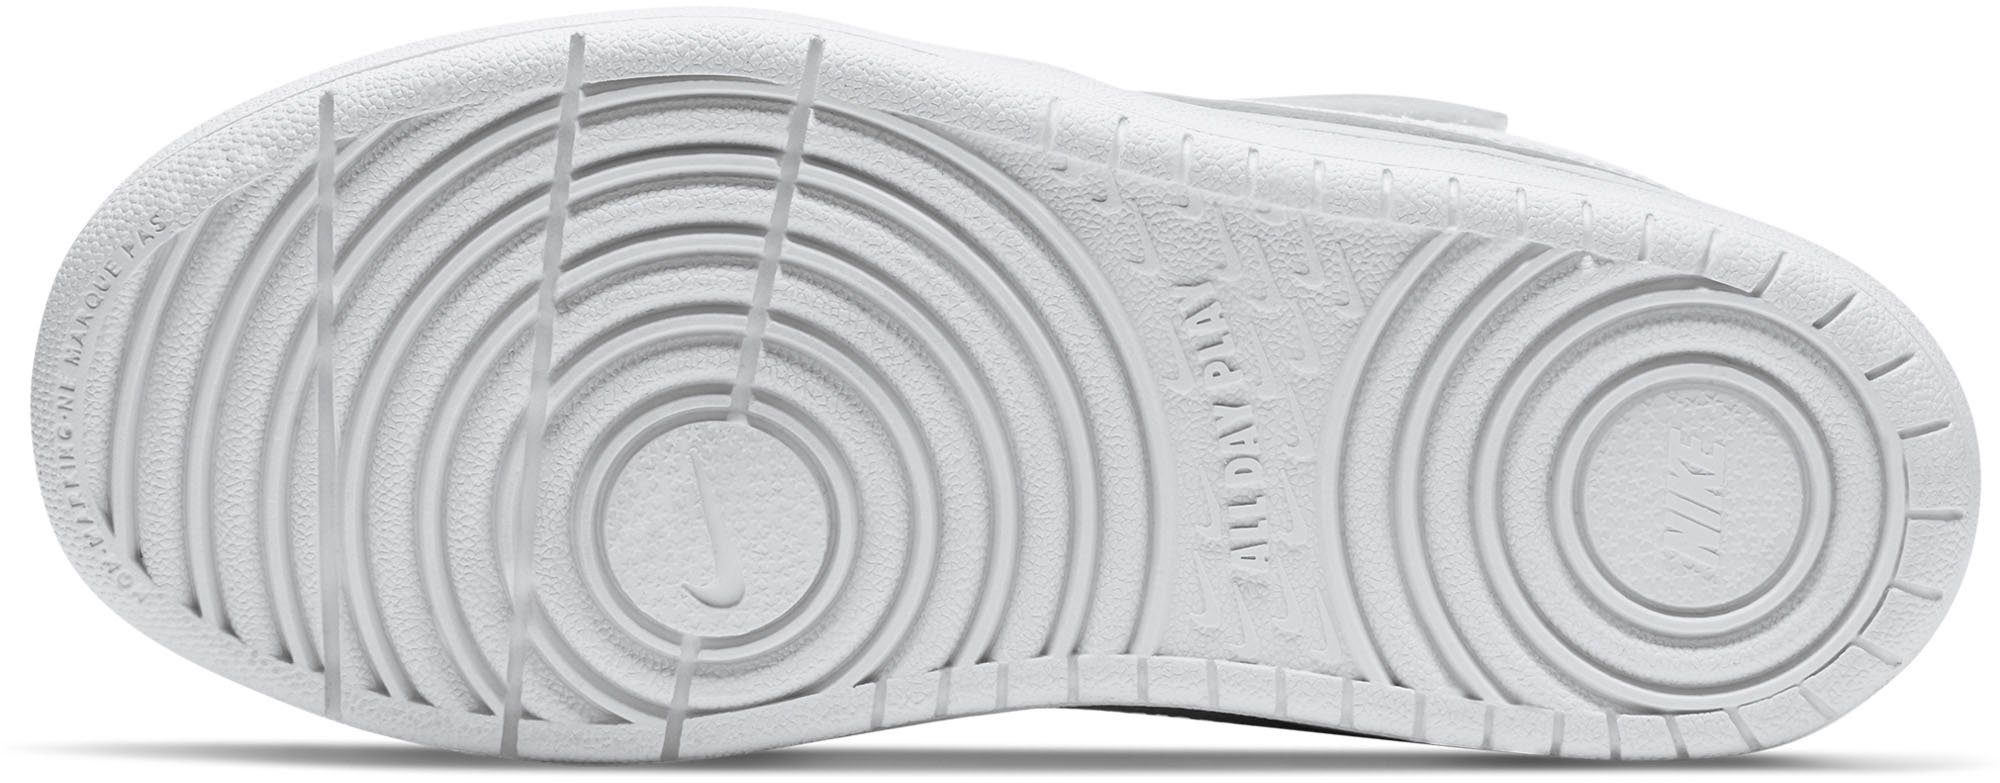 Sneaker des BOROUGH Design Nike LOW Spuren 1 Air den COURT Sportswear 2 auf Force